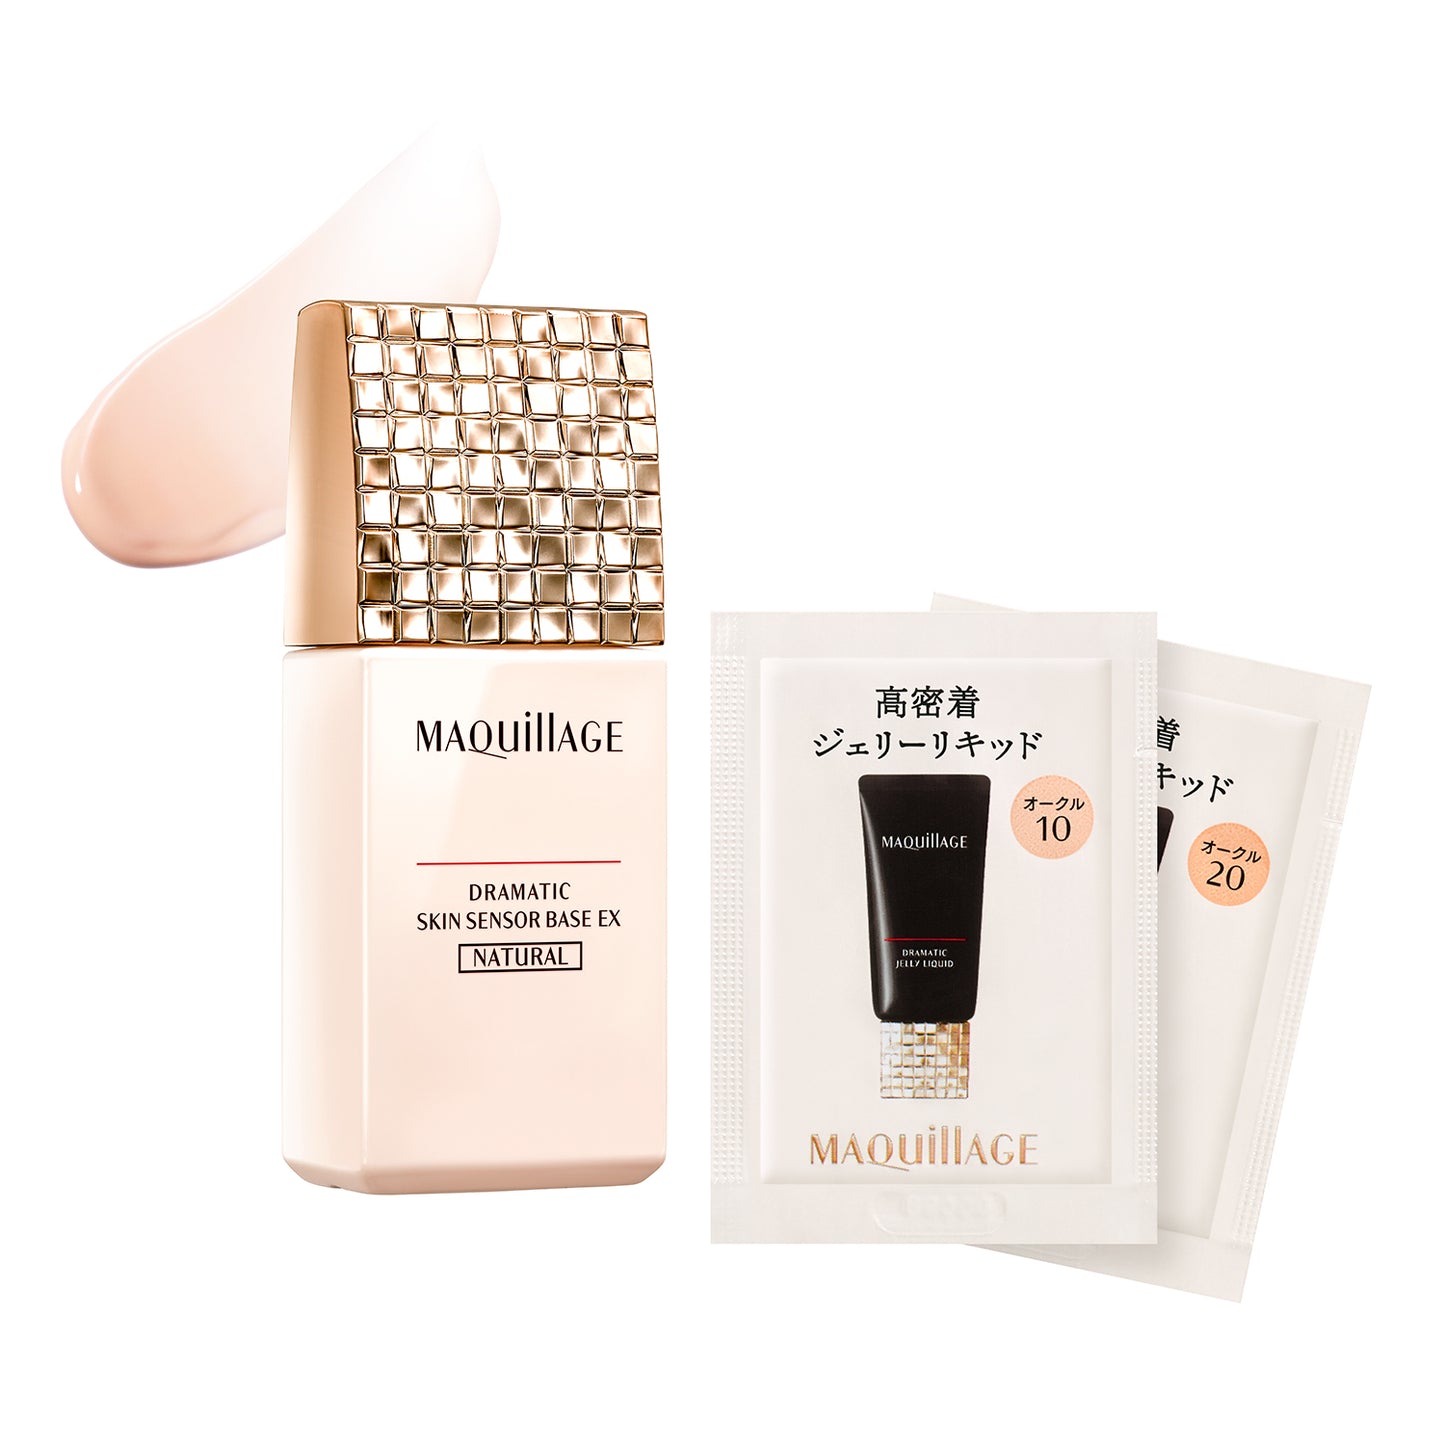 MAQuillAGE Dramatic Skin Sensor Base EX Natural Limited Edition